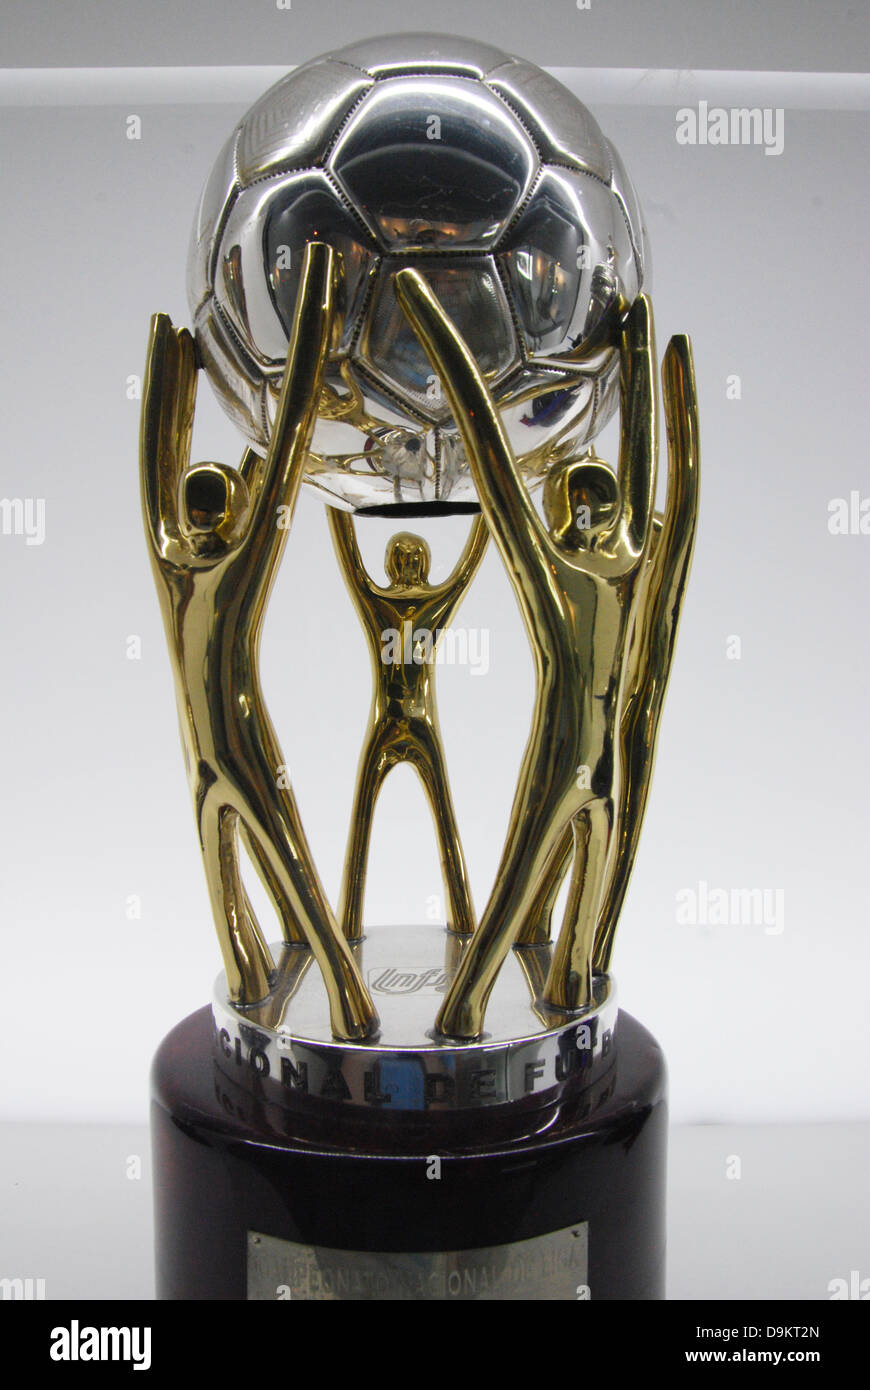 Trofeo de la Liga Española de Fútbol 2010-2011 Fotografía de stock - Alamy